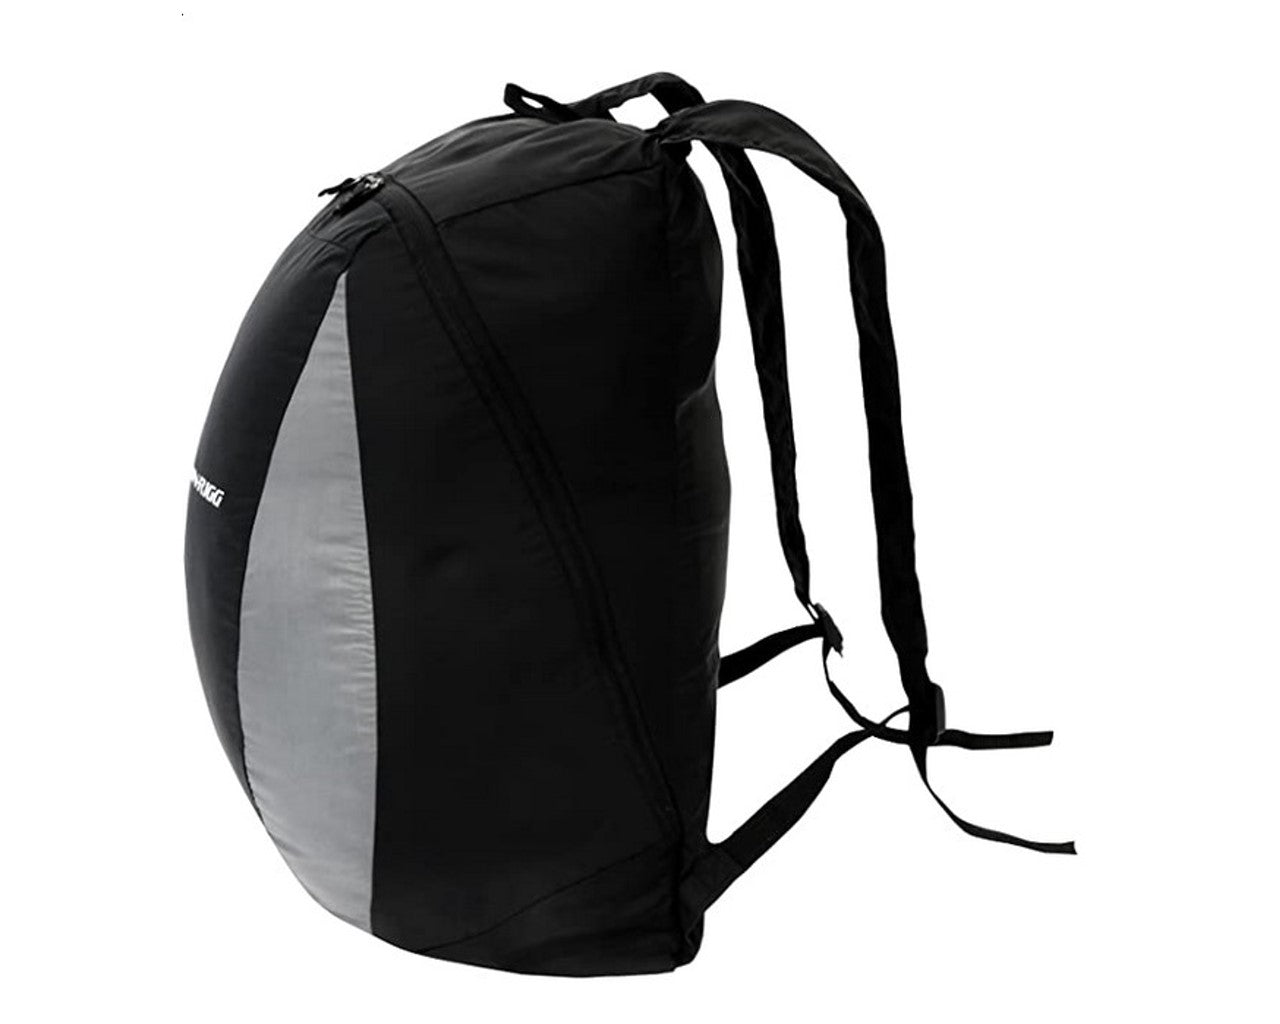 Nelson Rigg CB-PK30 Black Compact Expandable Backpack  CB-PK30